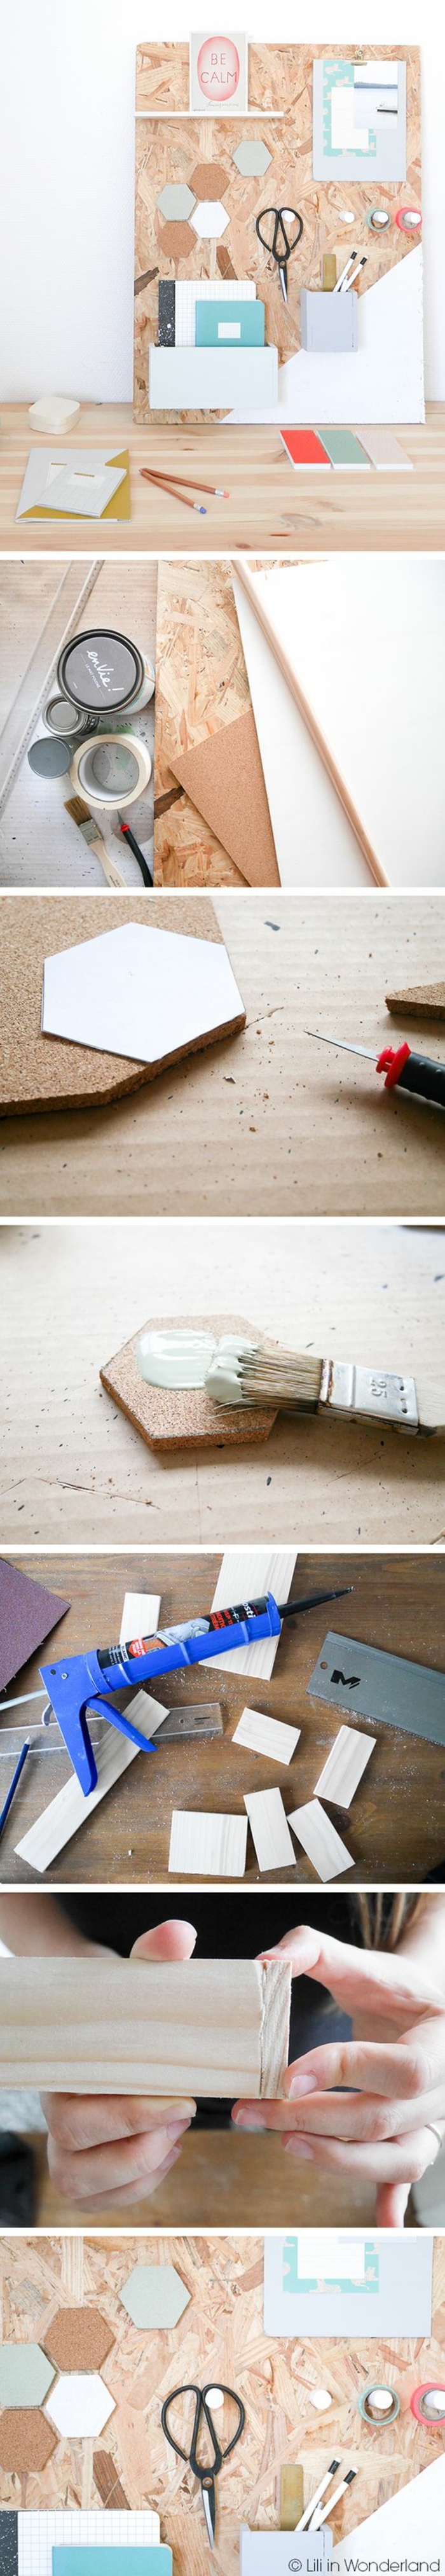 DIY مجلس دبوس خشبي ، غرز ، حامل القلم ، paintbrush